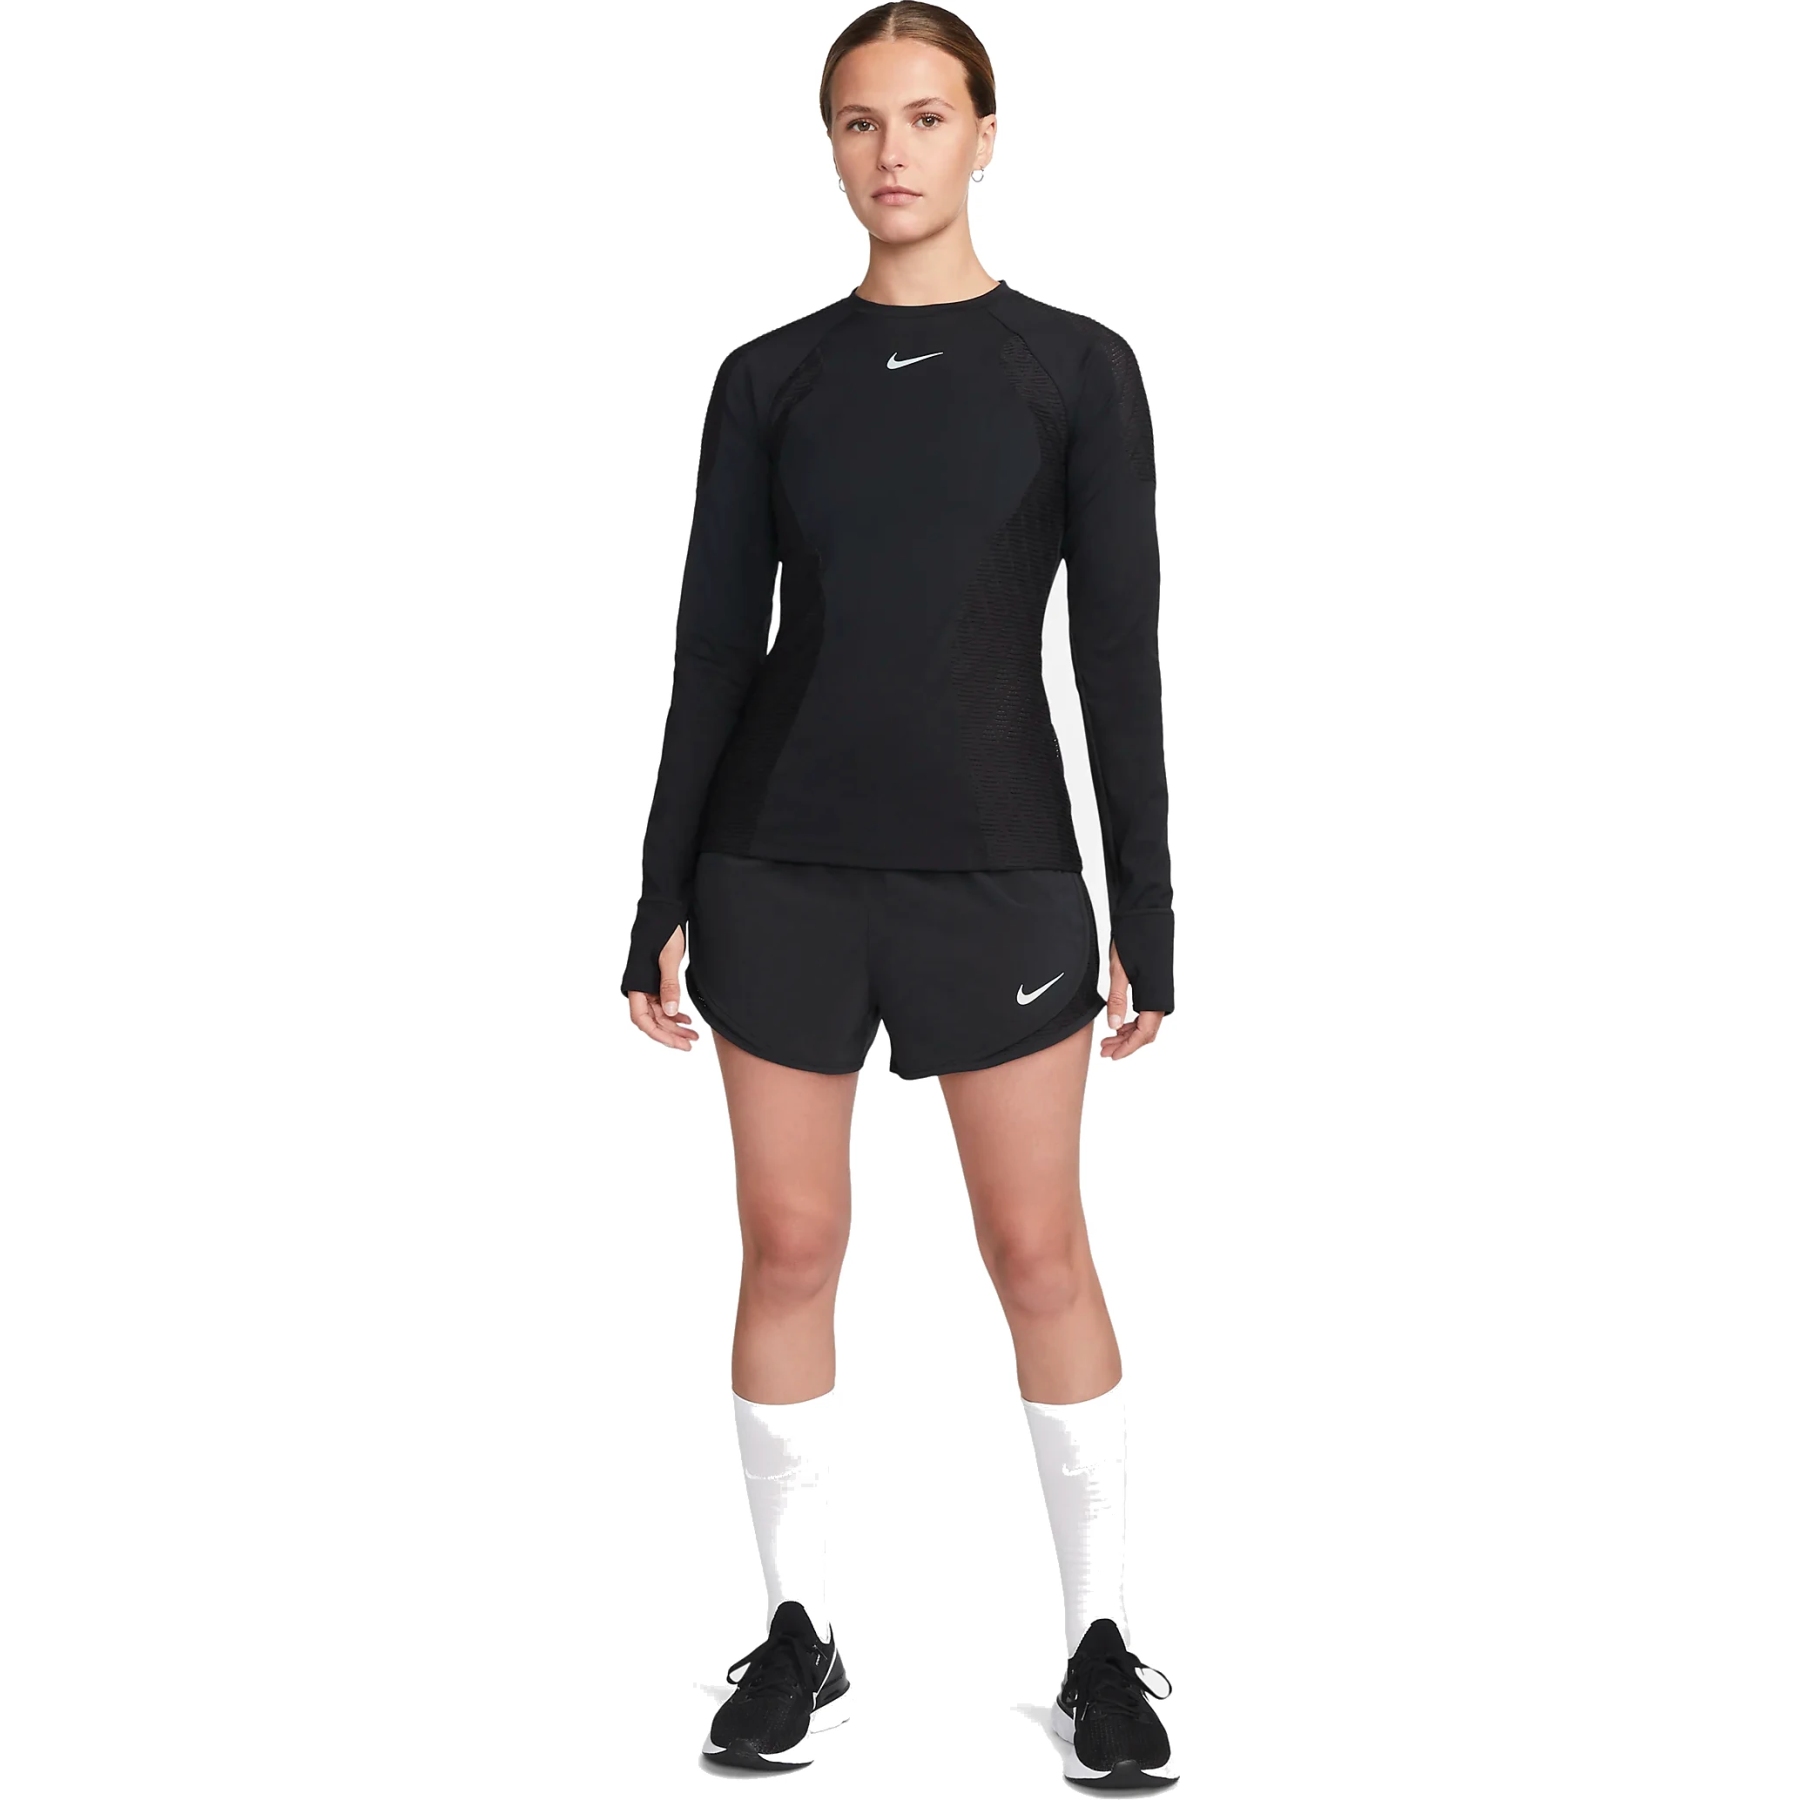 Nike Dri-FIT ADV Run Division Long Sleeve Top Women - black/black